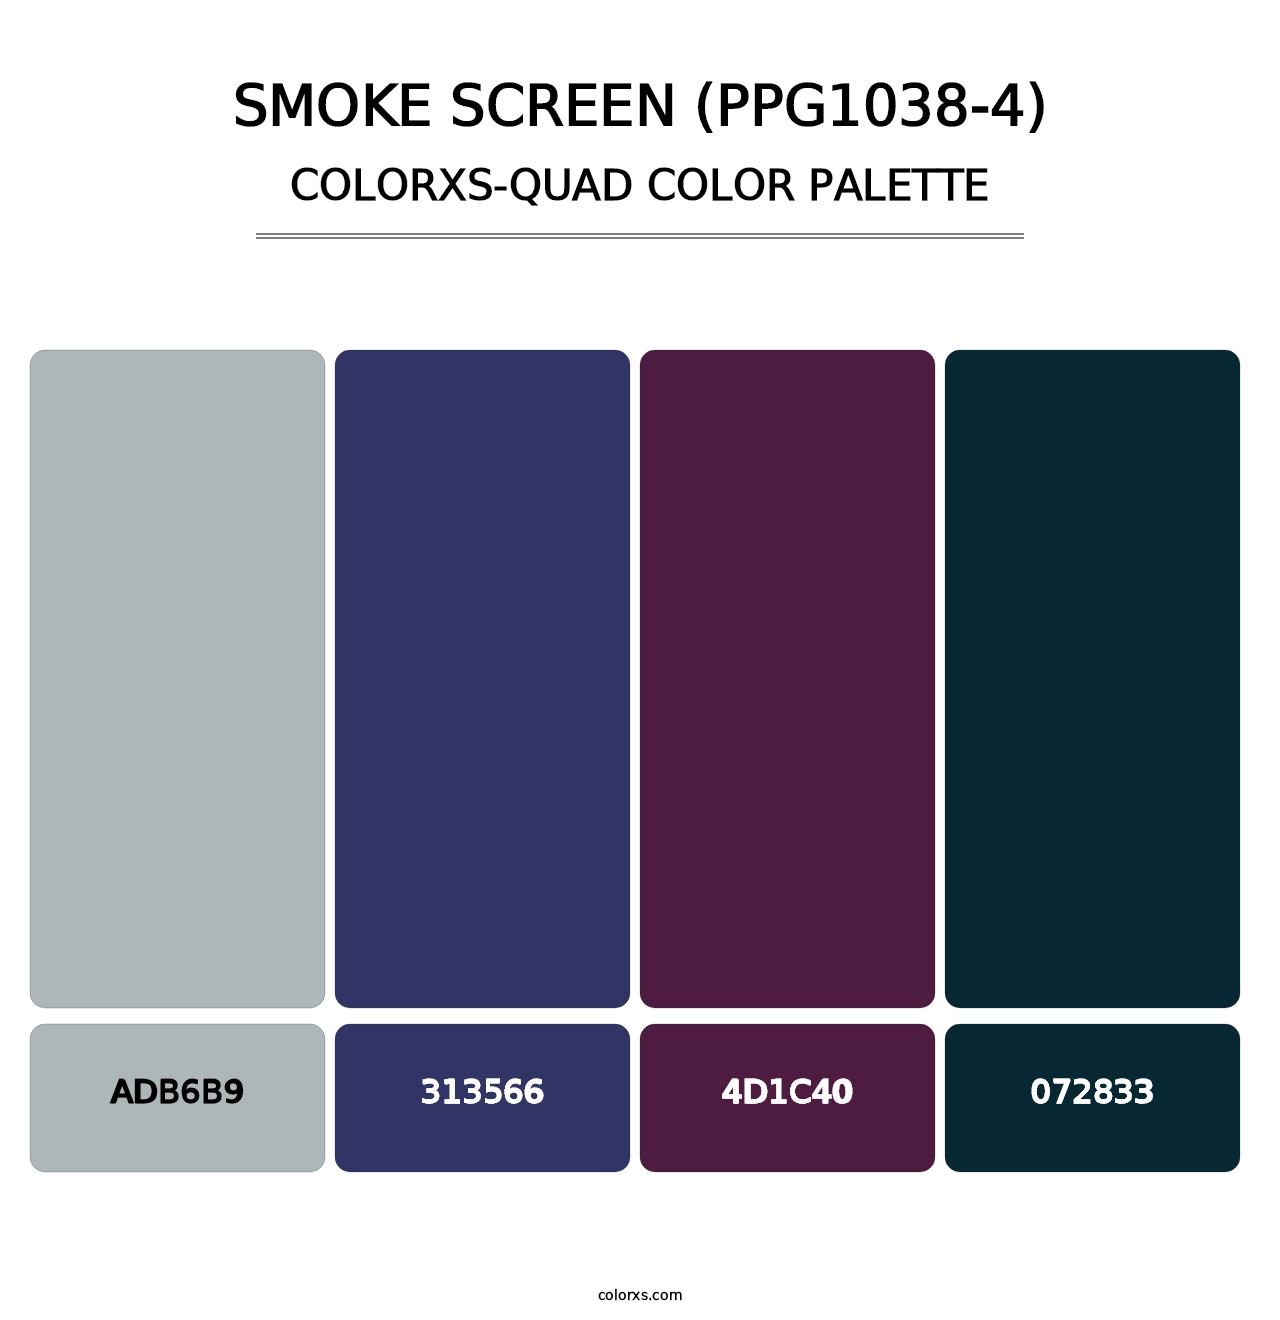 Smoke Screen (PPG1038-4) - Colorxs Quad Palette